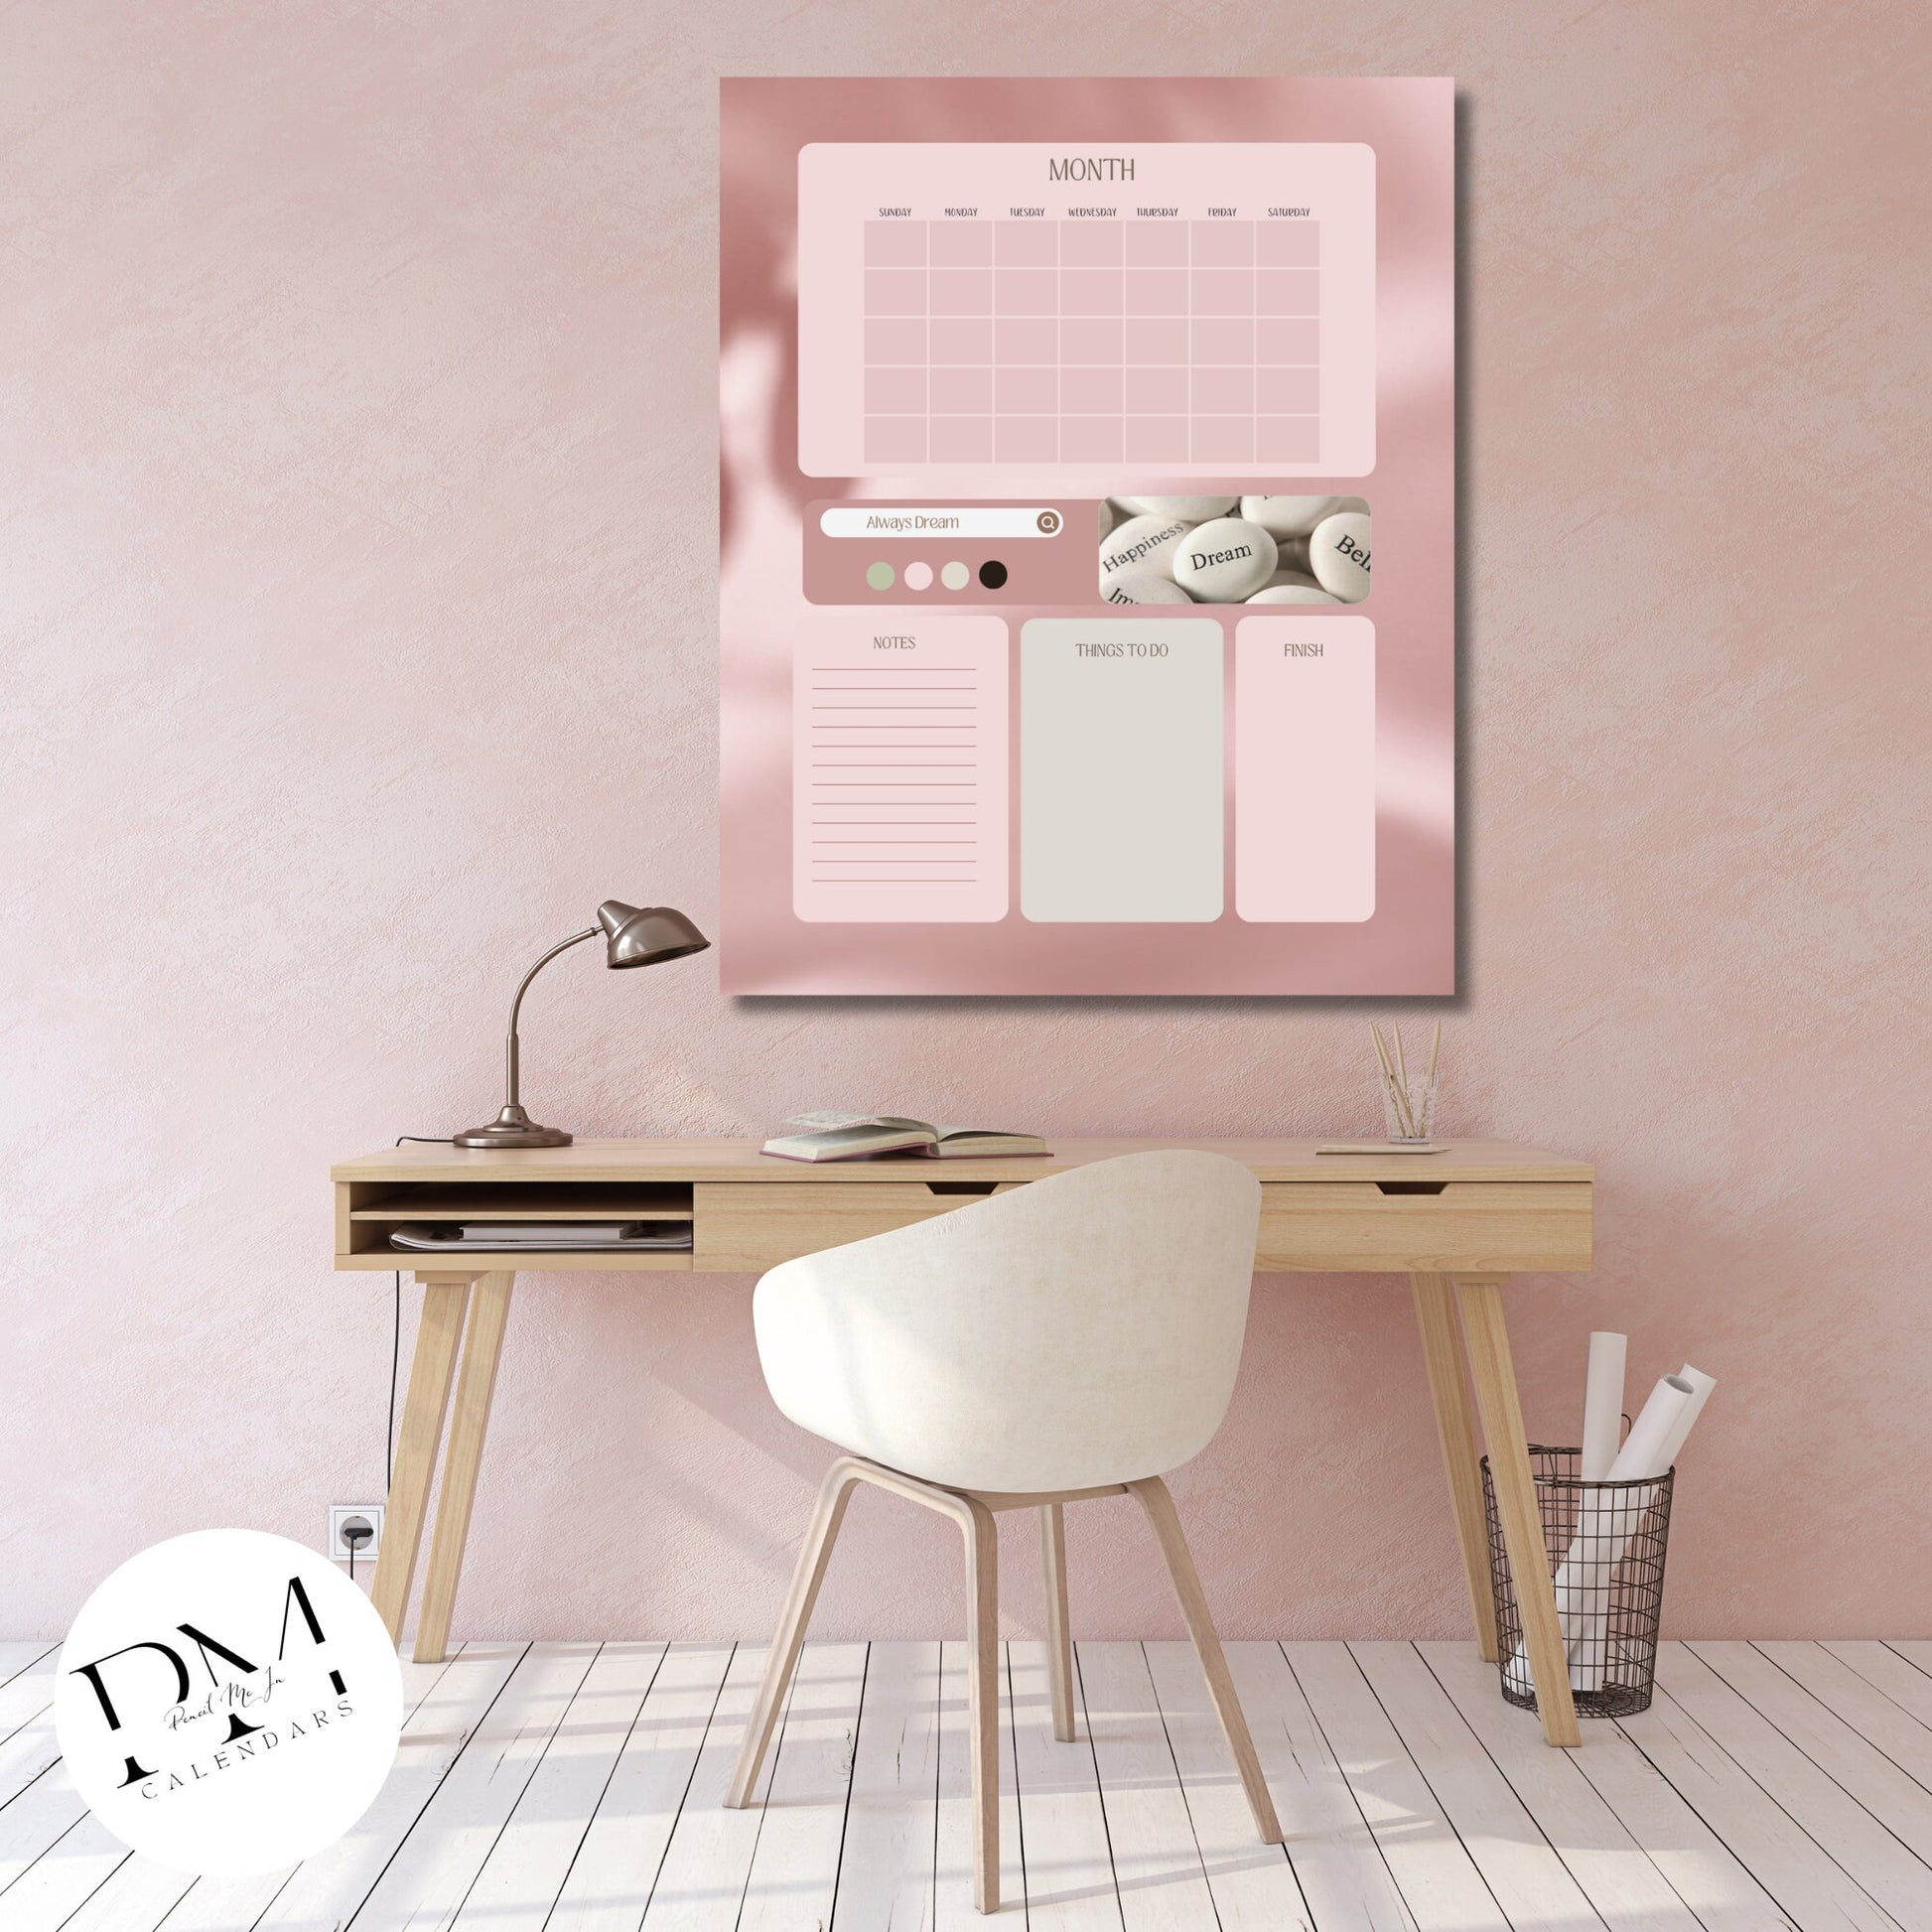 Acrylic Wall Calendar, Acrylic Calendar, Everyday Calendar, Pink Daily Planner, Quote Calendar, Monthly Blank Calendar, Girl Boss Office